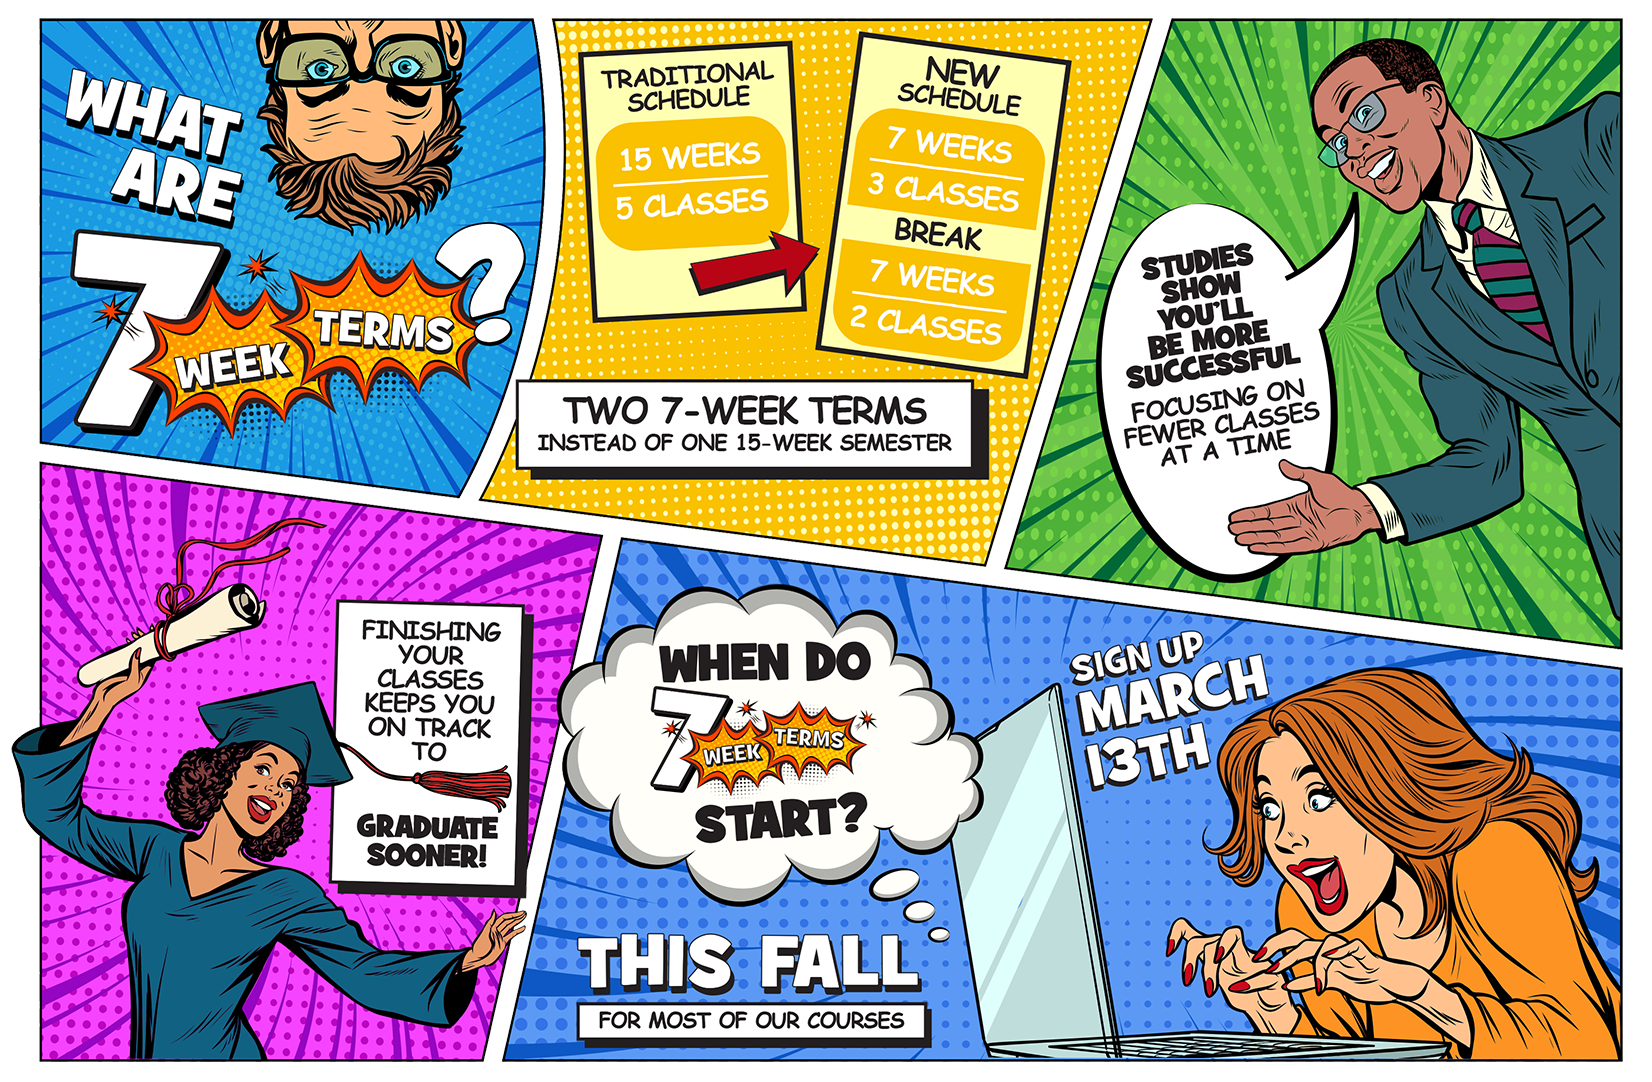 comic strip announcing 7 week classes starting fall. Details below.